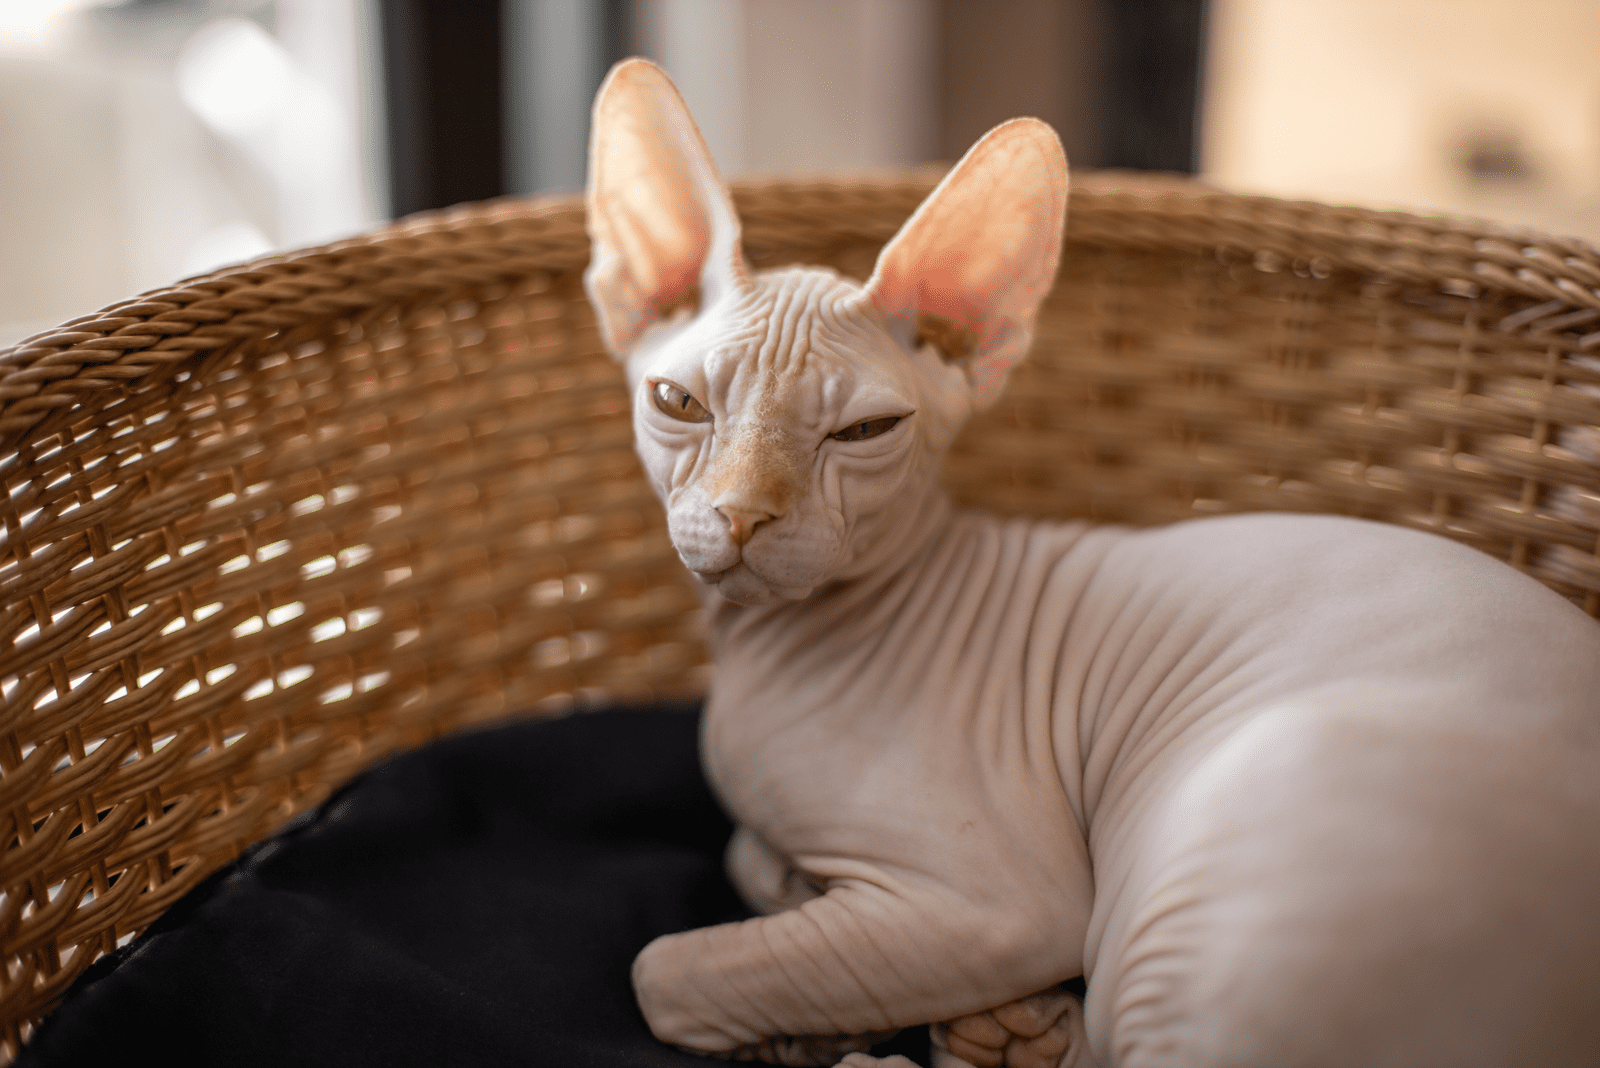 Sphynx cat resting in wooden basket